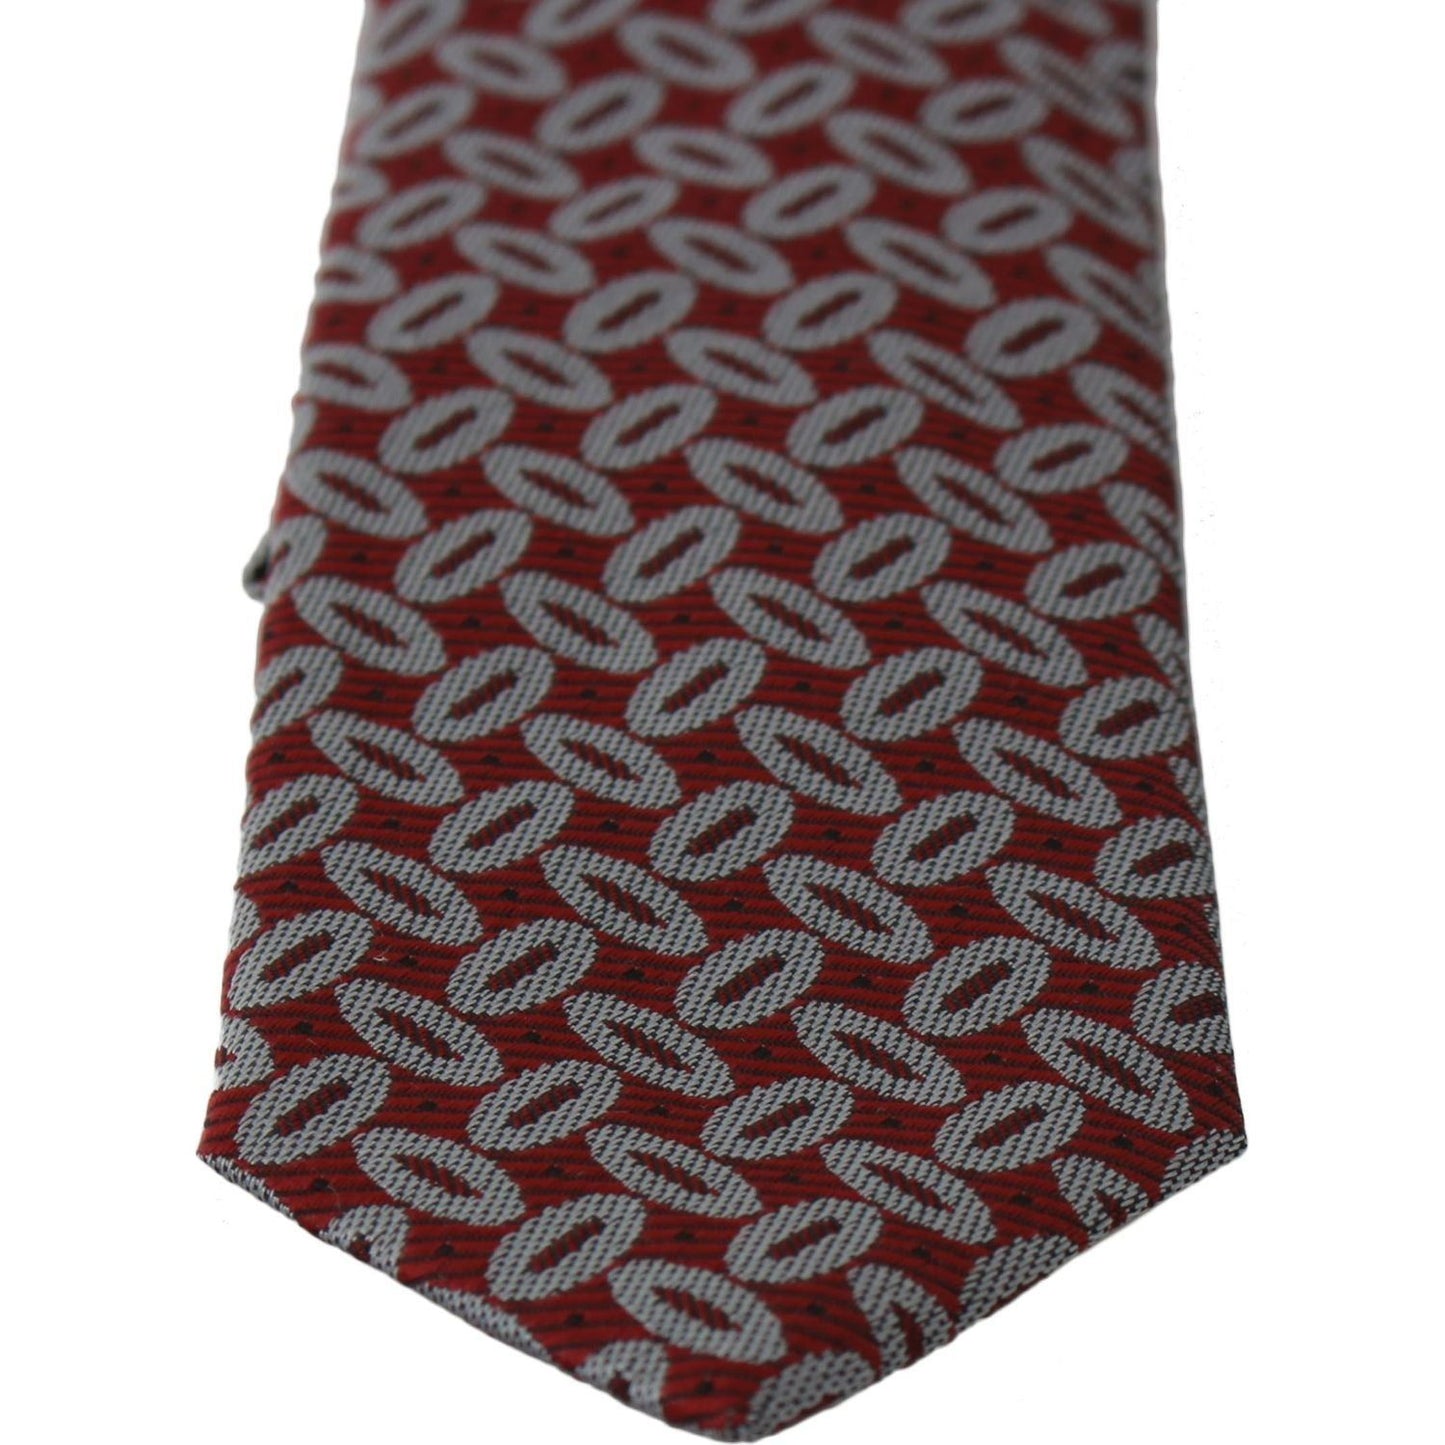 Dolce & Gabbana Elegant Red Printed Silk Neck Tie red-100-silk-printed-wide-necktie-men-tie Necktie IMG_1473-8f17cc65-5e3.jpg